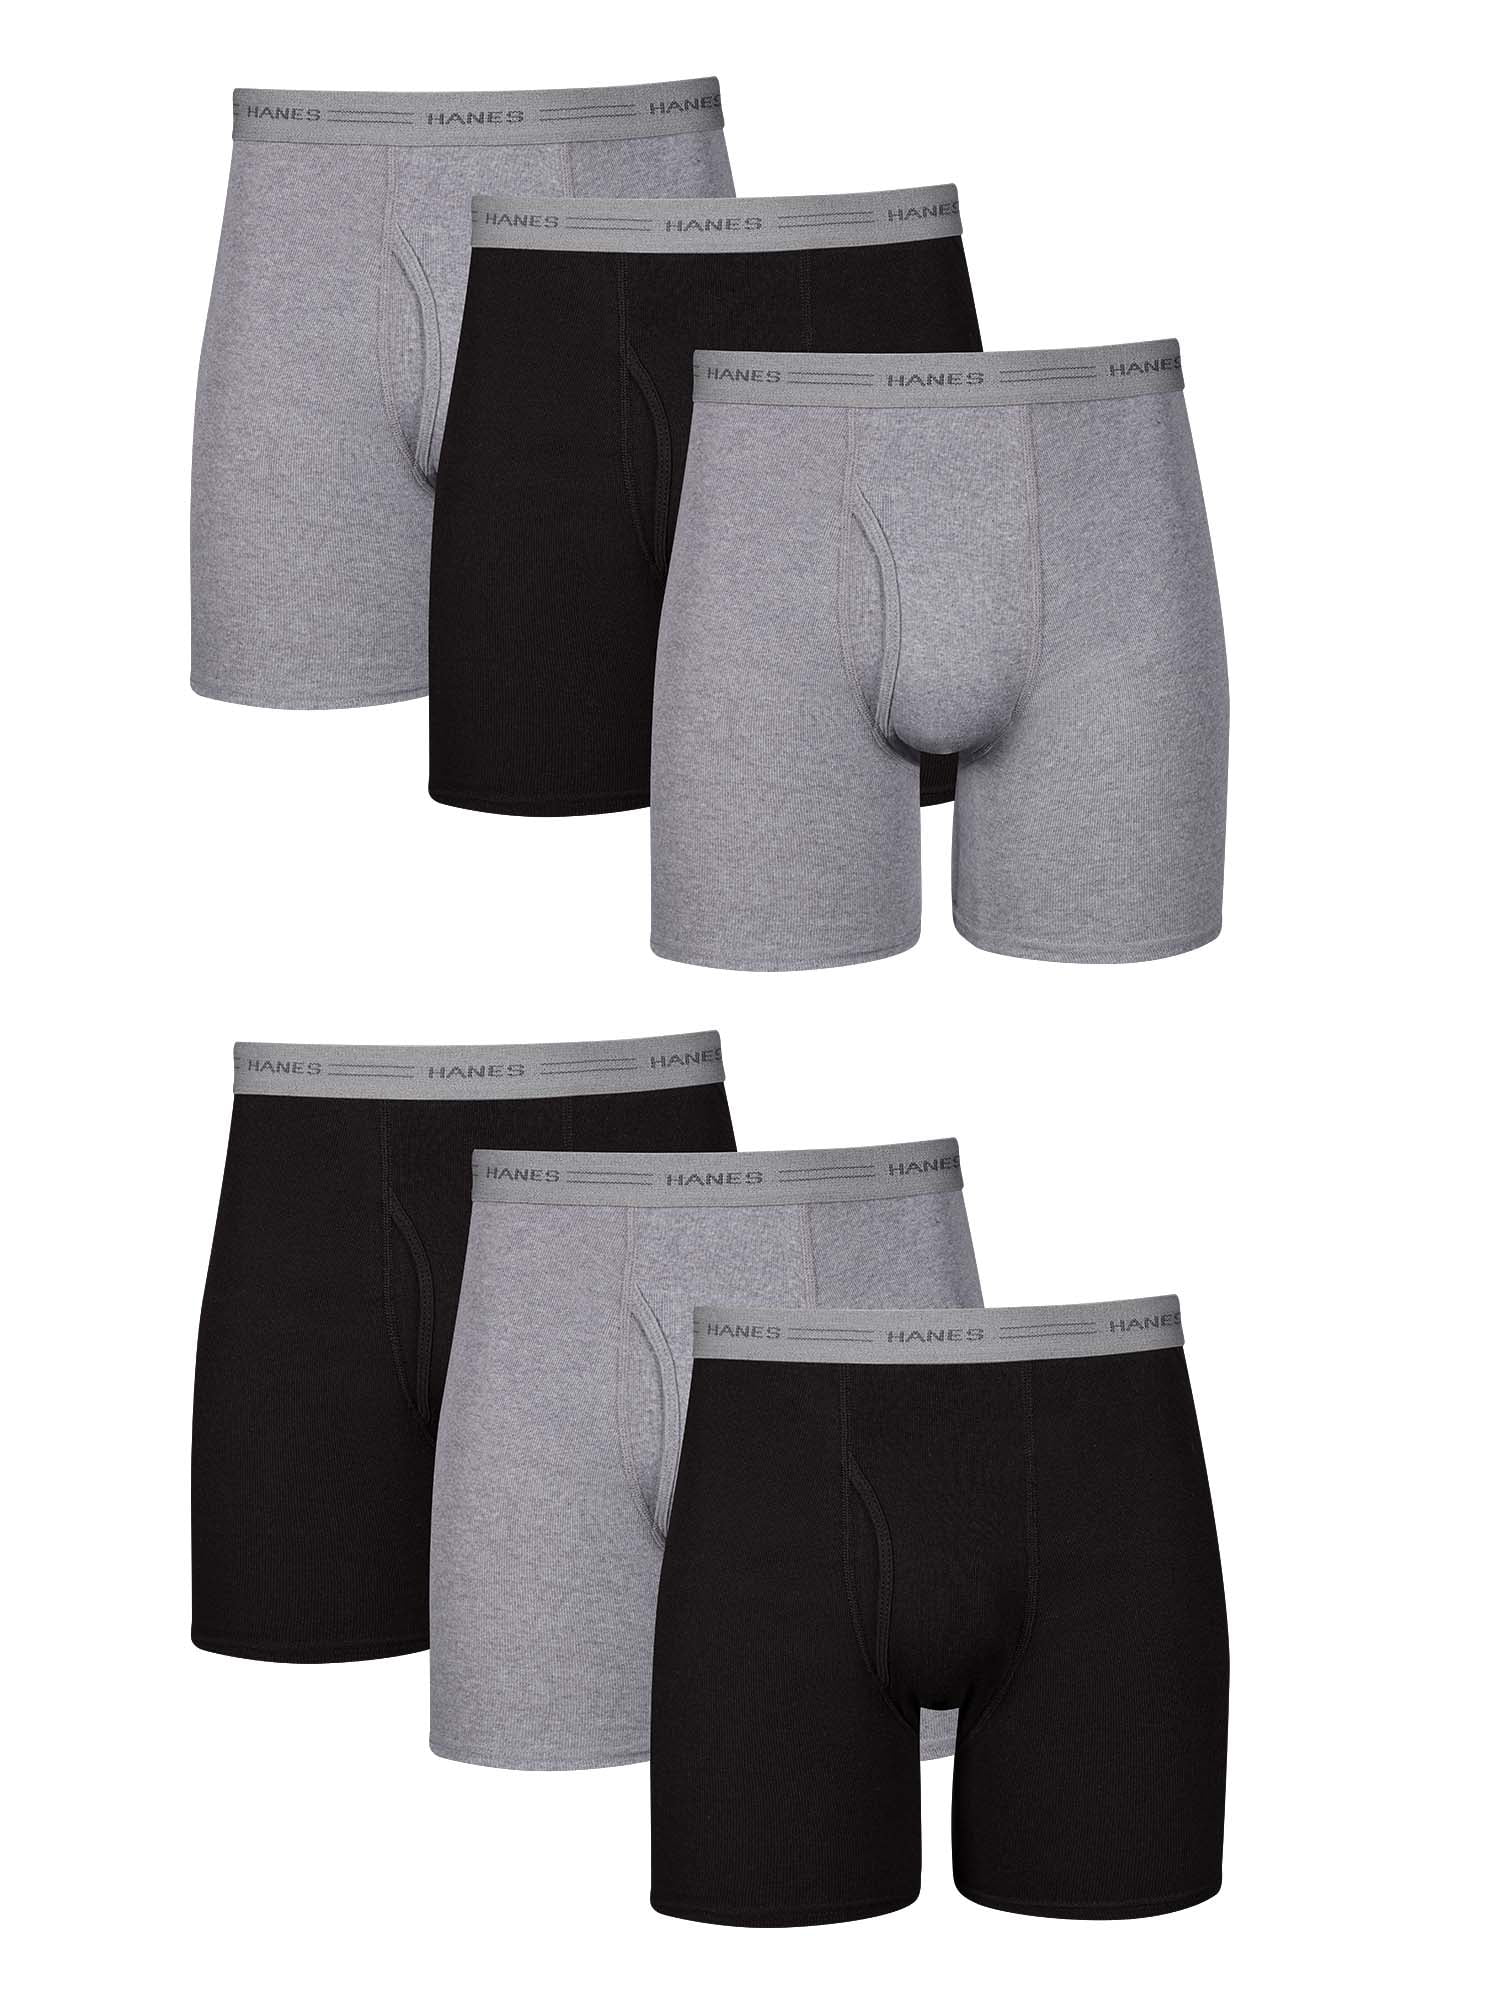 Hanes Men's Value Pack Black/Grey Boxer Briefs, 6 Pack - Walmart.com